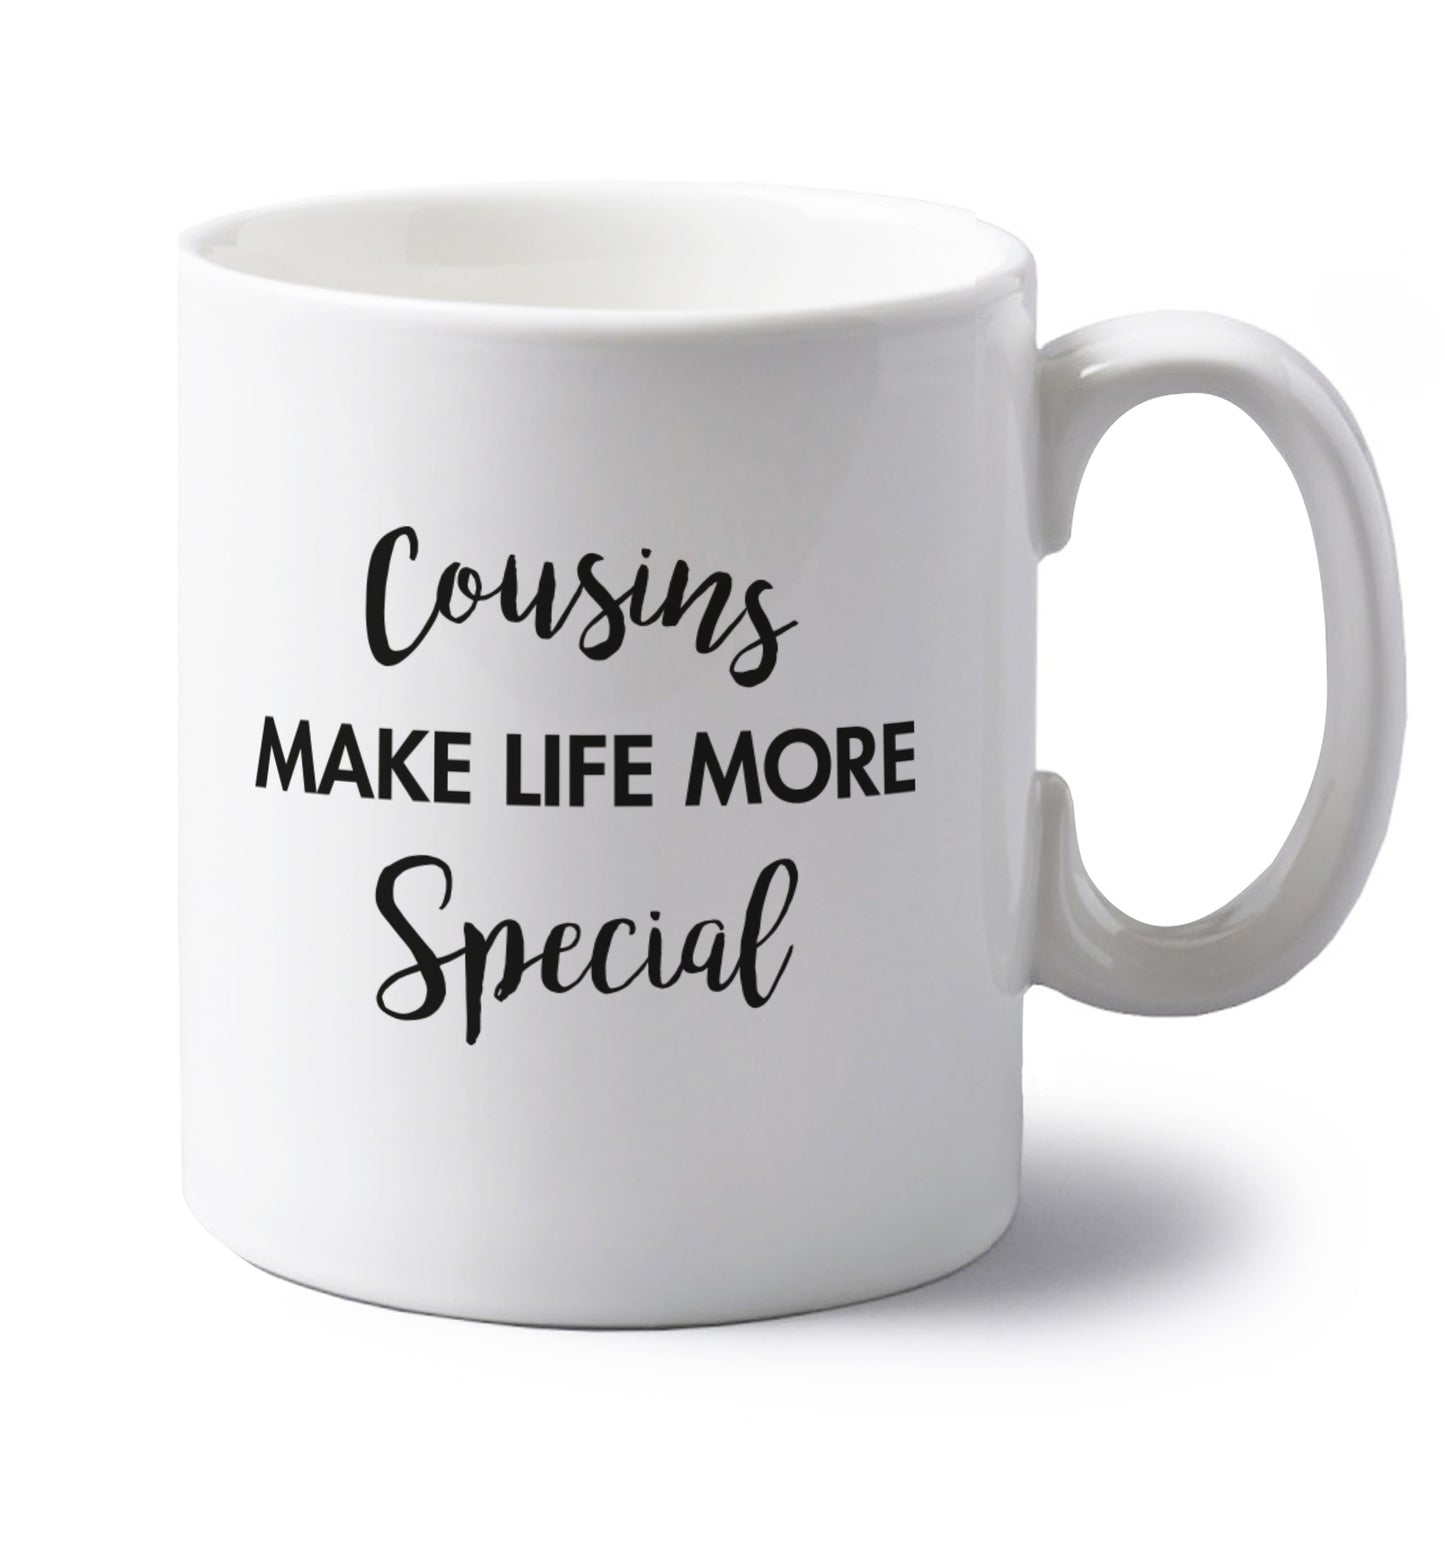 Cousins make life more special left handed white ceramic mug 